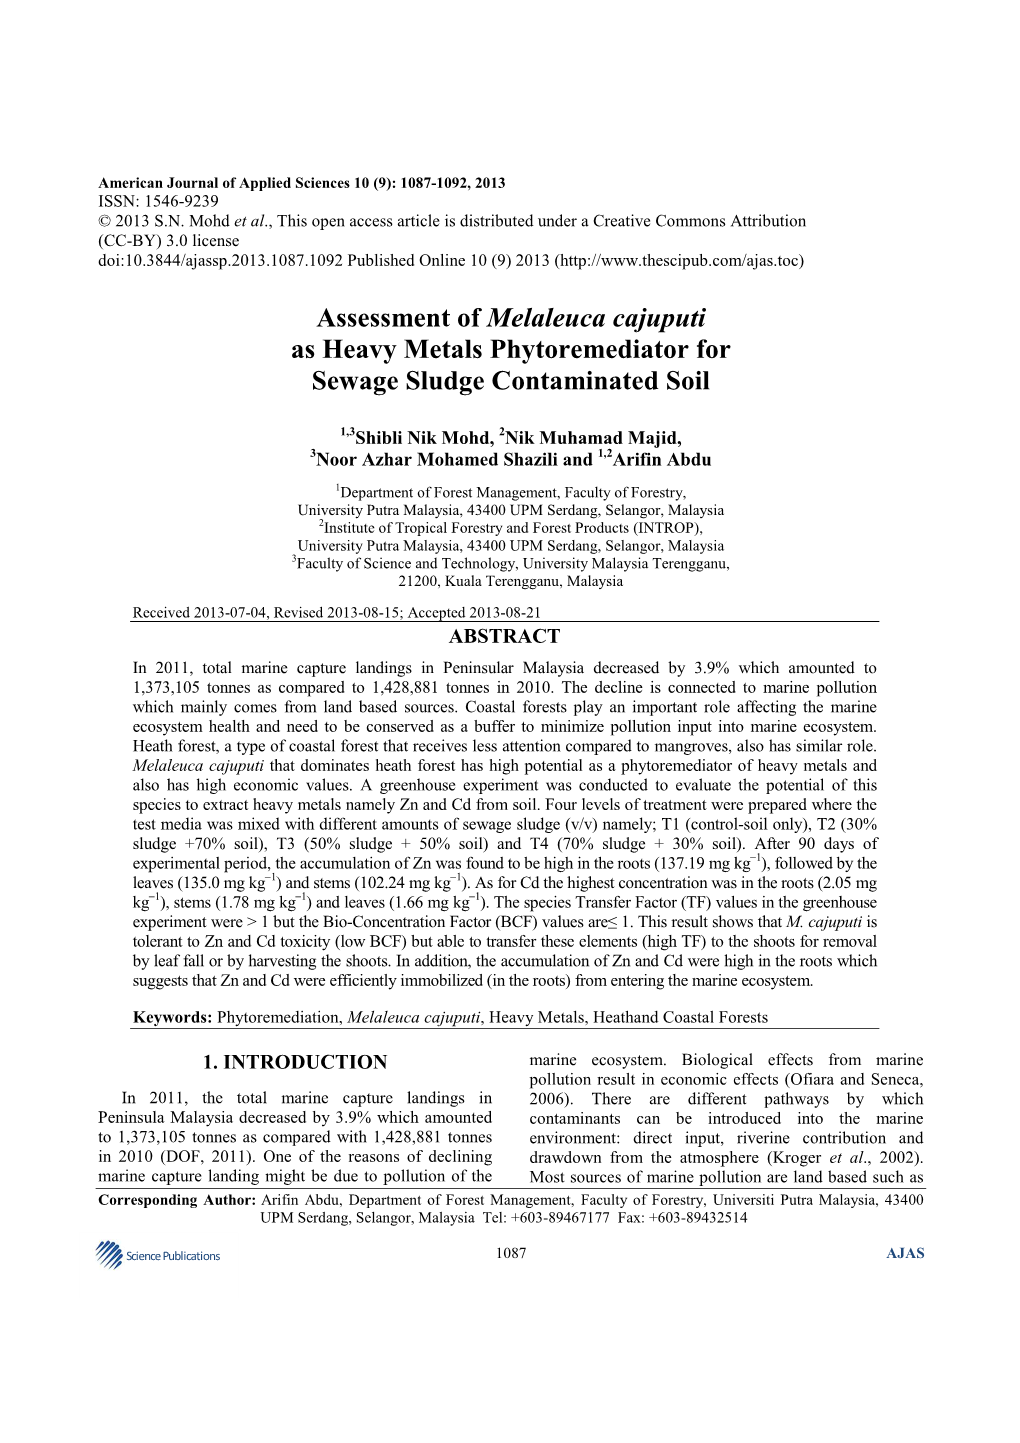 Assessment of Melaleuca Cajuputi As Heavy Metals Phytoremediator for Sewage Sludge Contaminated Soil